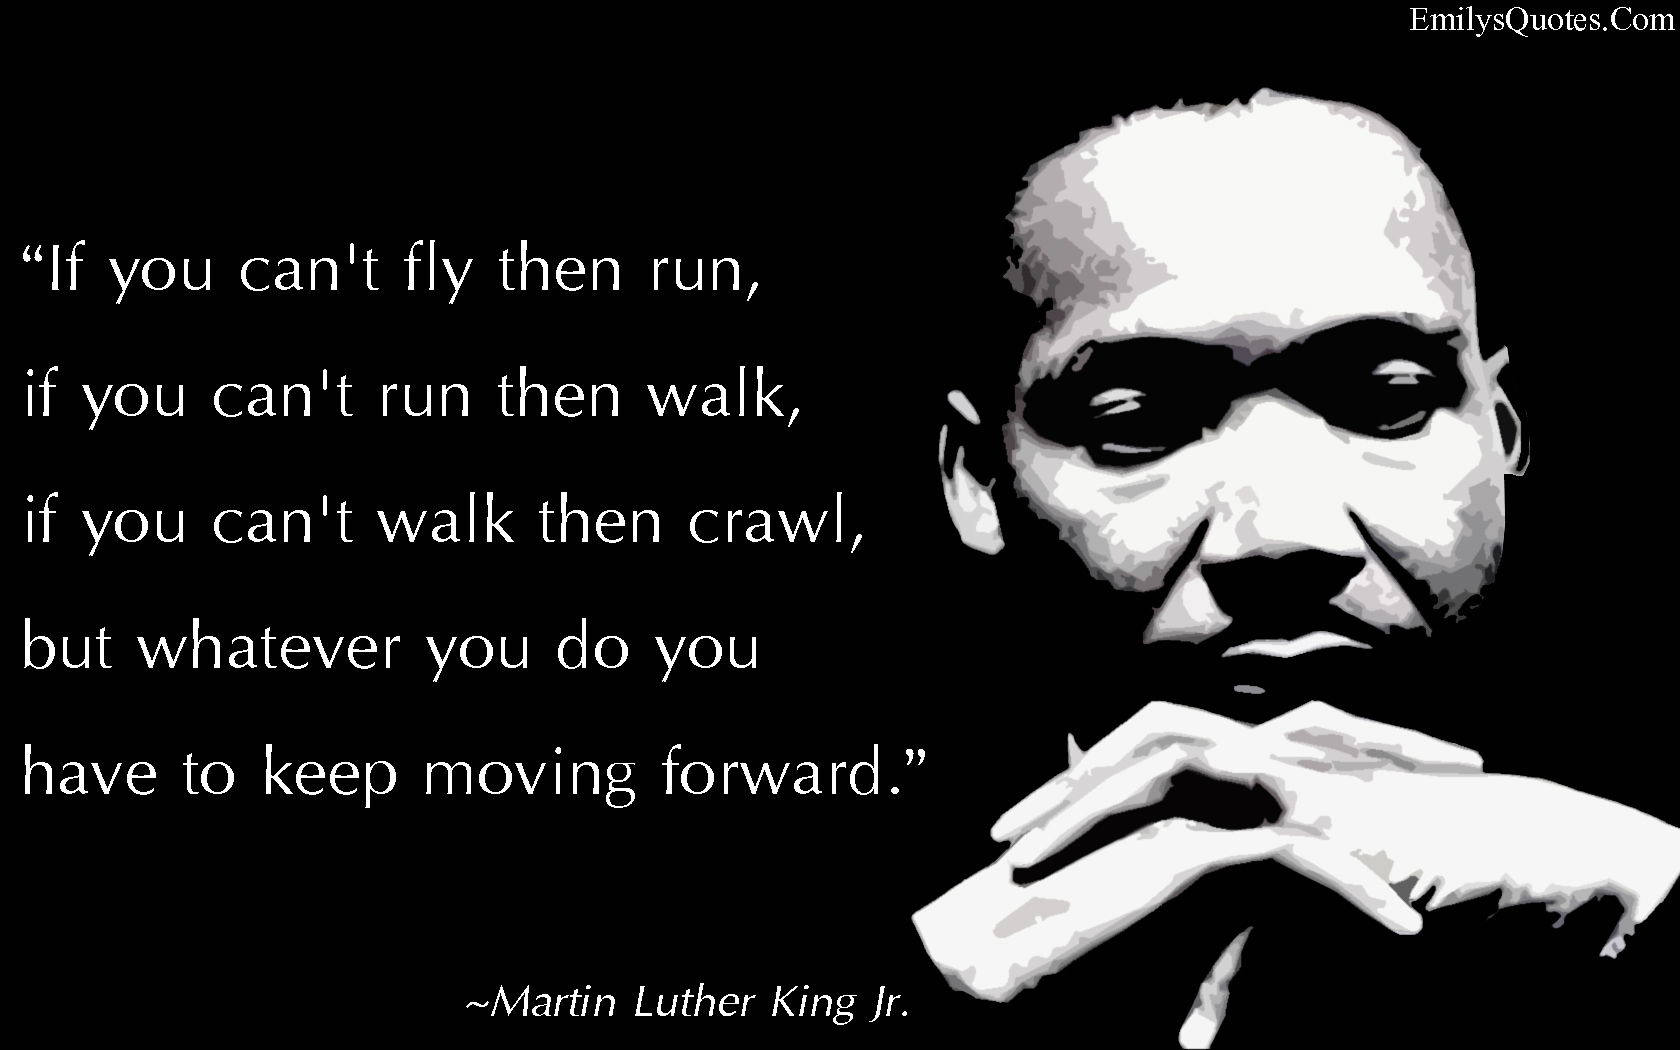 EmilysQuotes.Com-inspirational-motivational-keep-moving-encouraging-amazing-great-Martin-Luther-King-Jr. 2